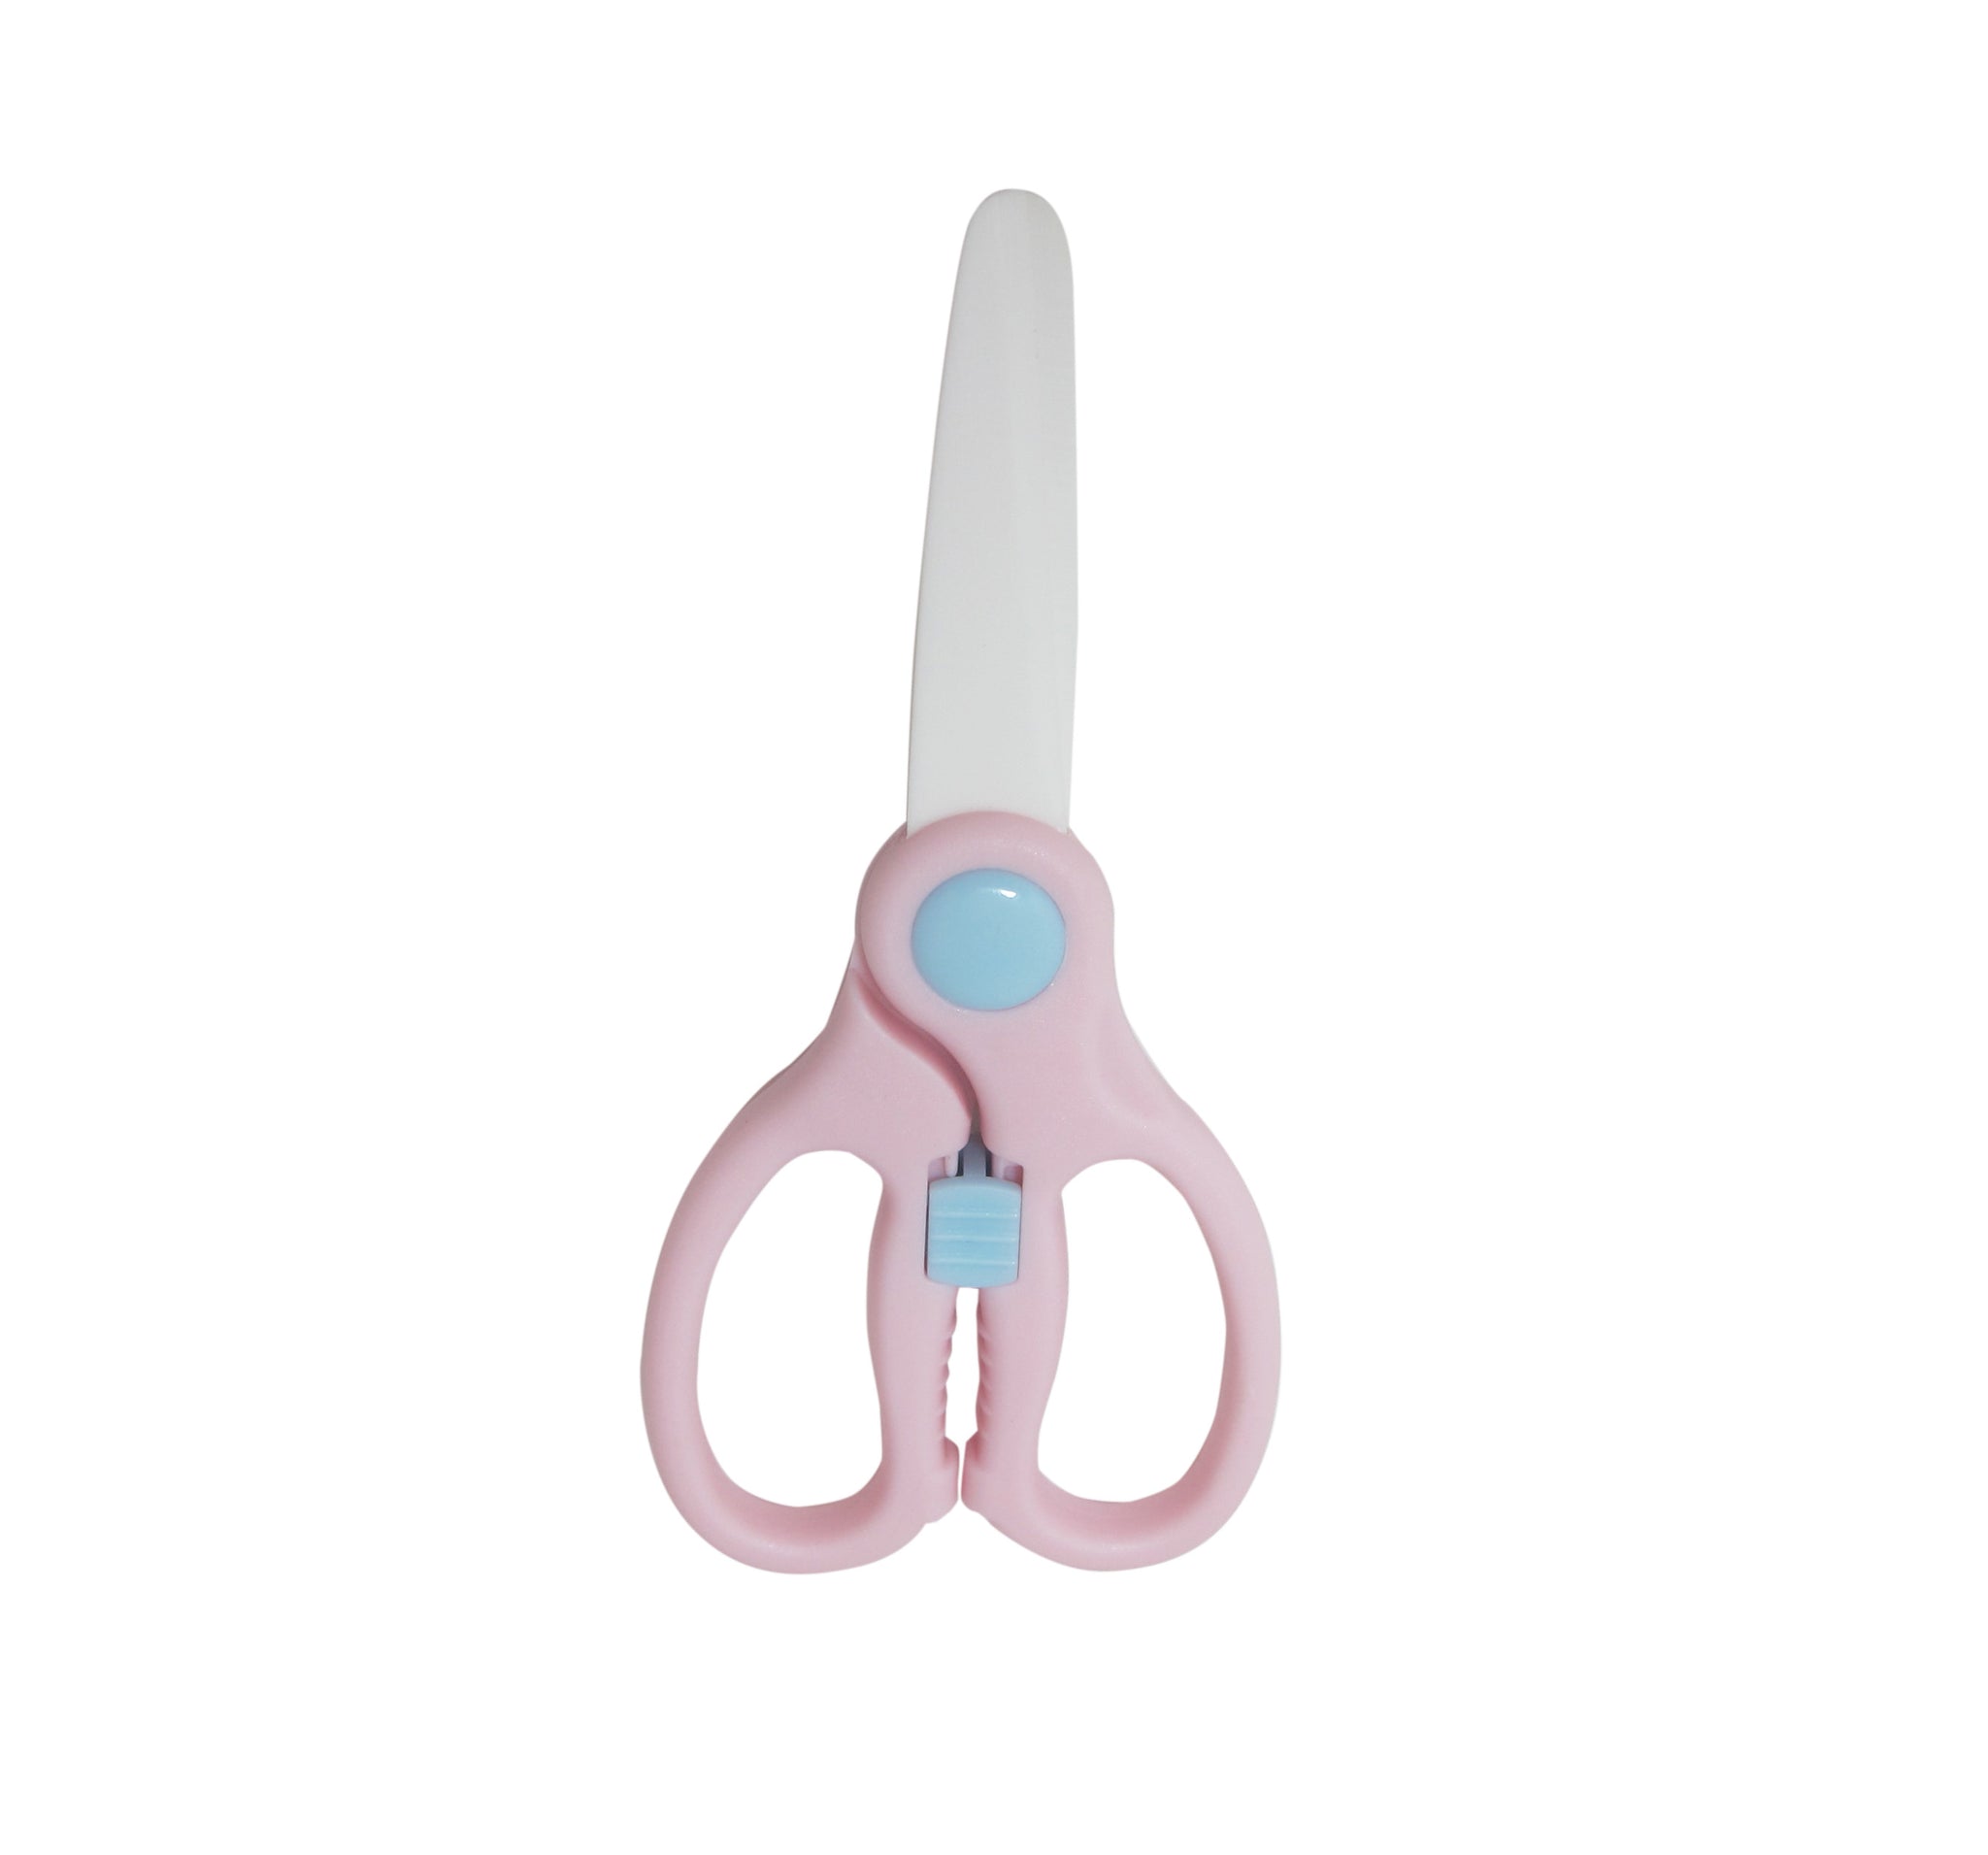 Plus Kids Training Safety Scissors - Pink